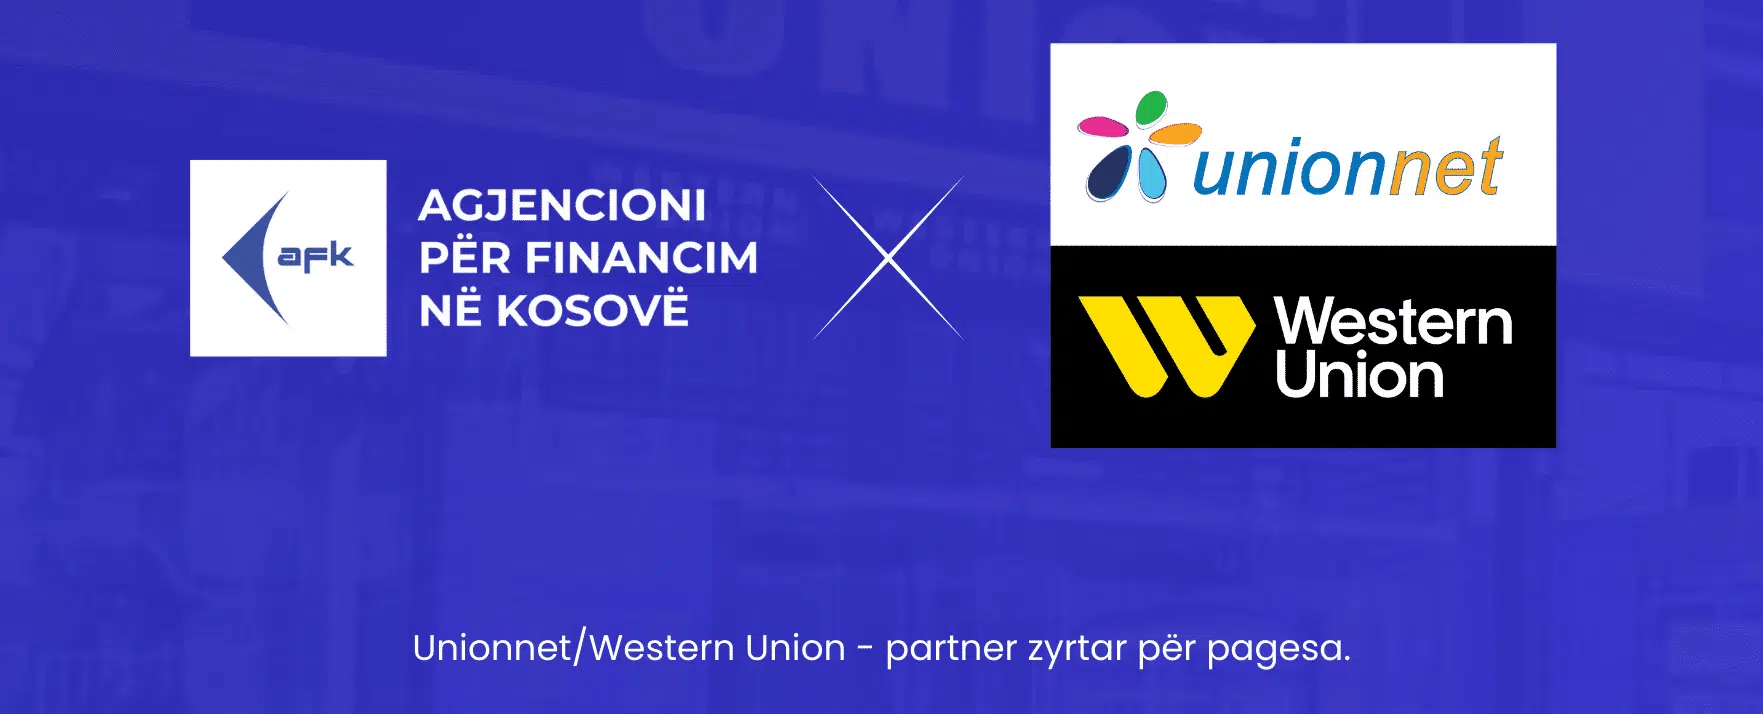 afk / unionnet - westernunion partnership